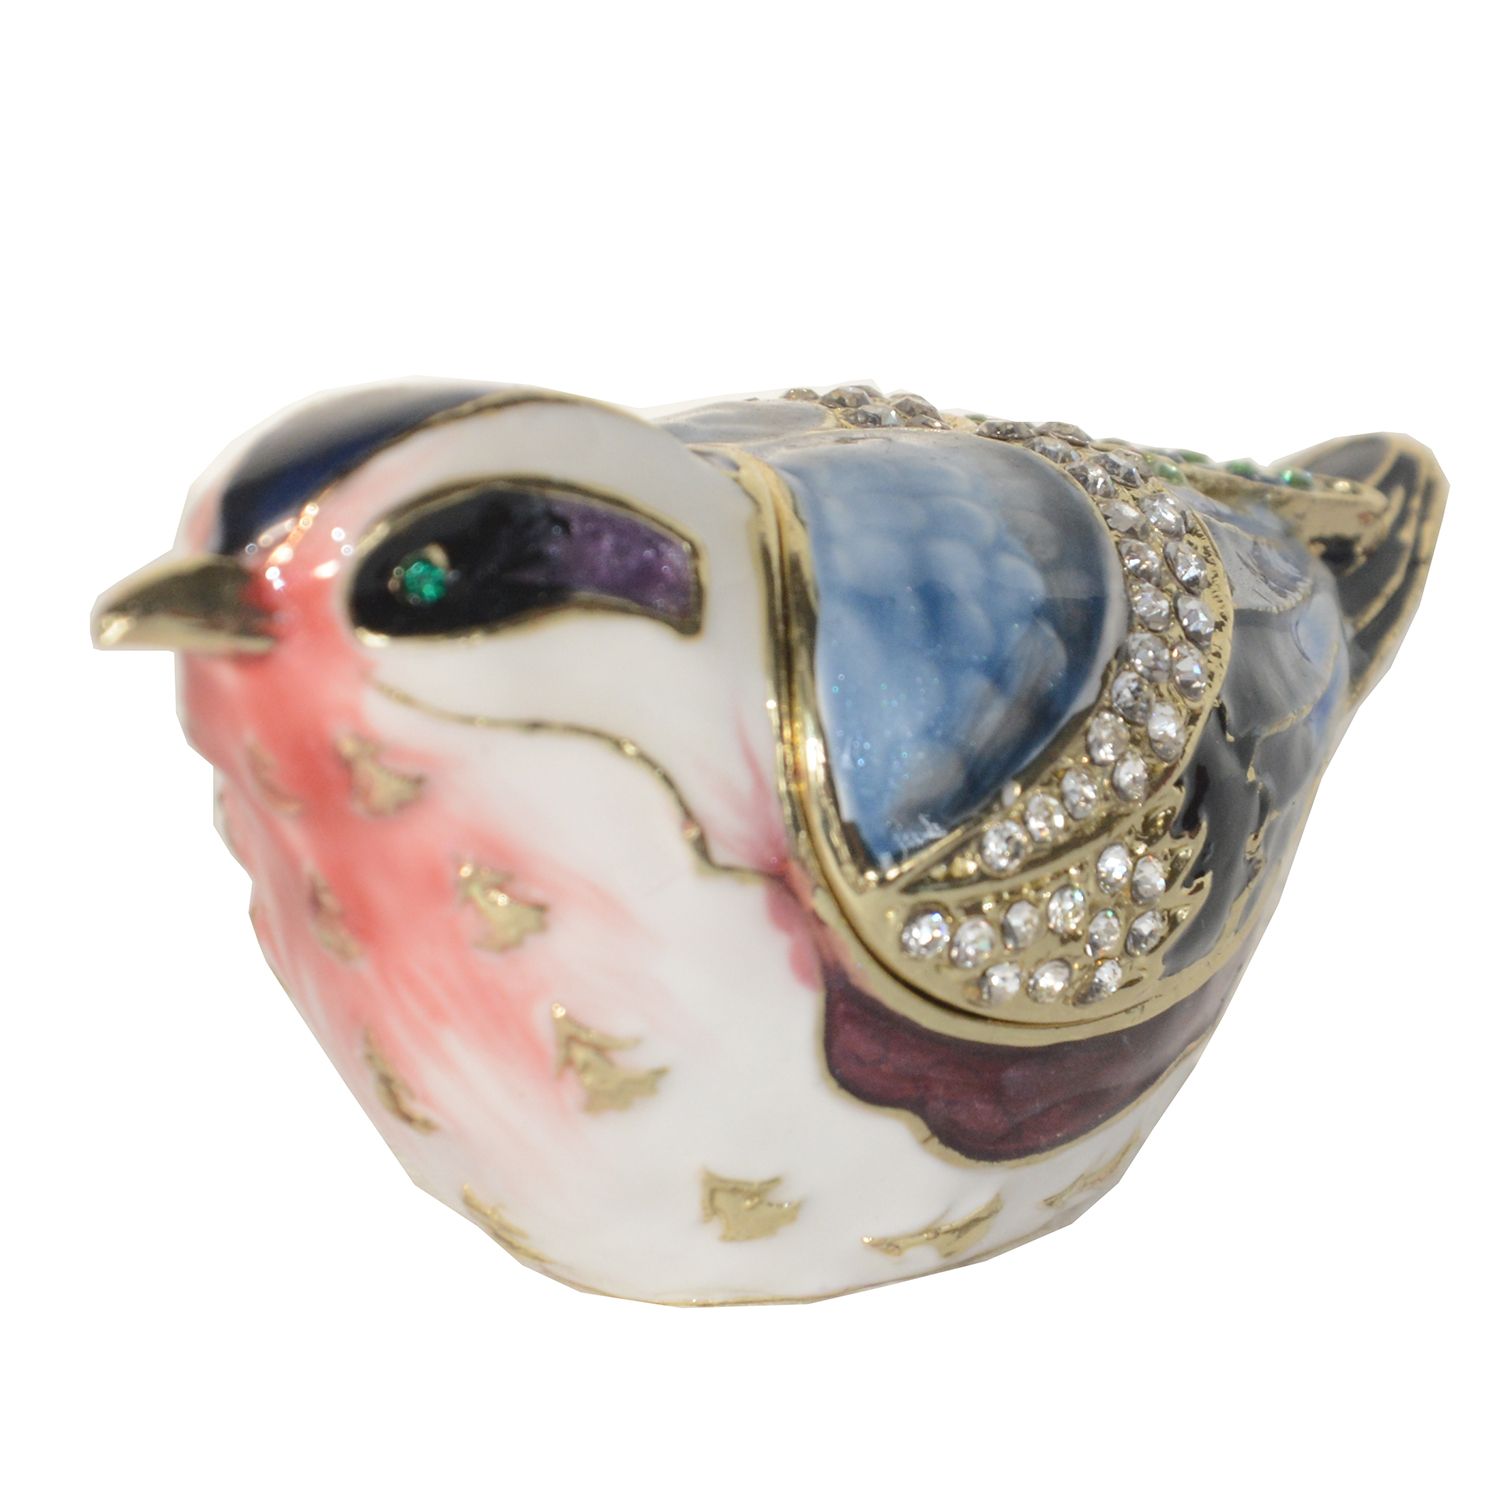 Chickadee Bird Trinket Jewelry Enameled Box Crystals Figurine Decor Gifts Holder